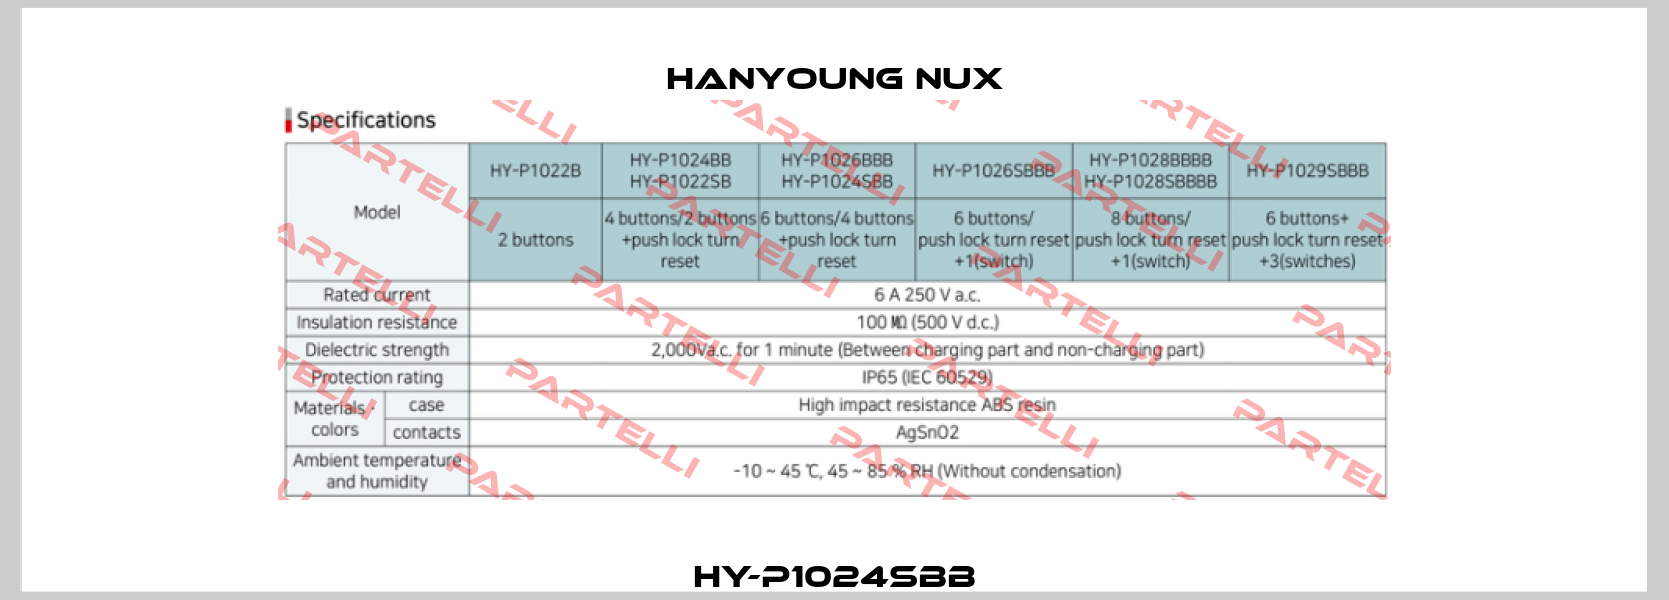 HY-P1024SBB HanYoung NUX